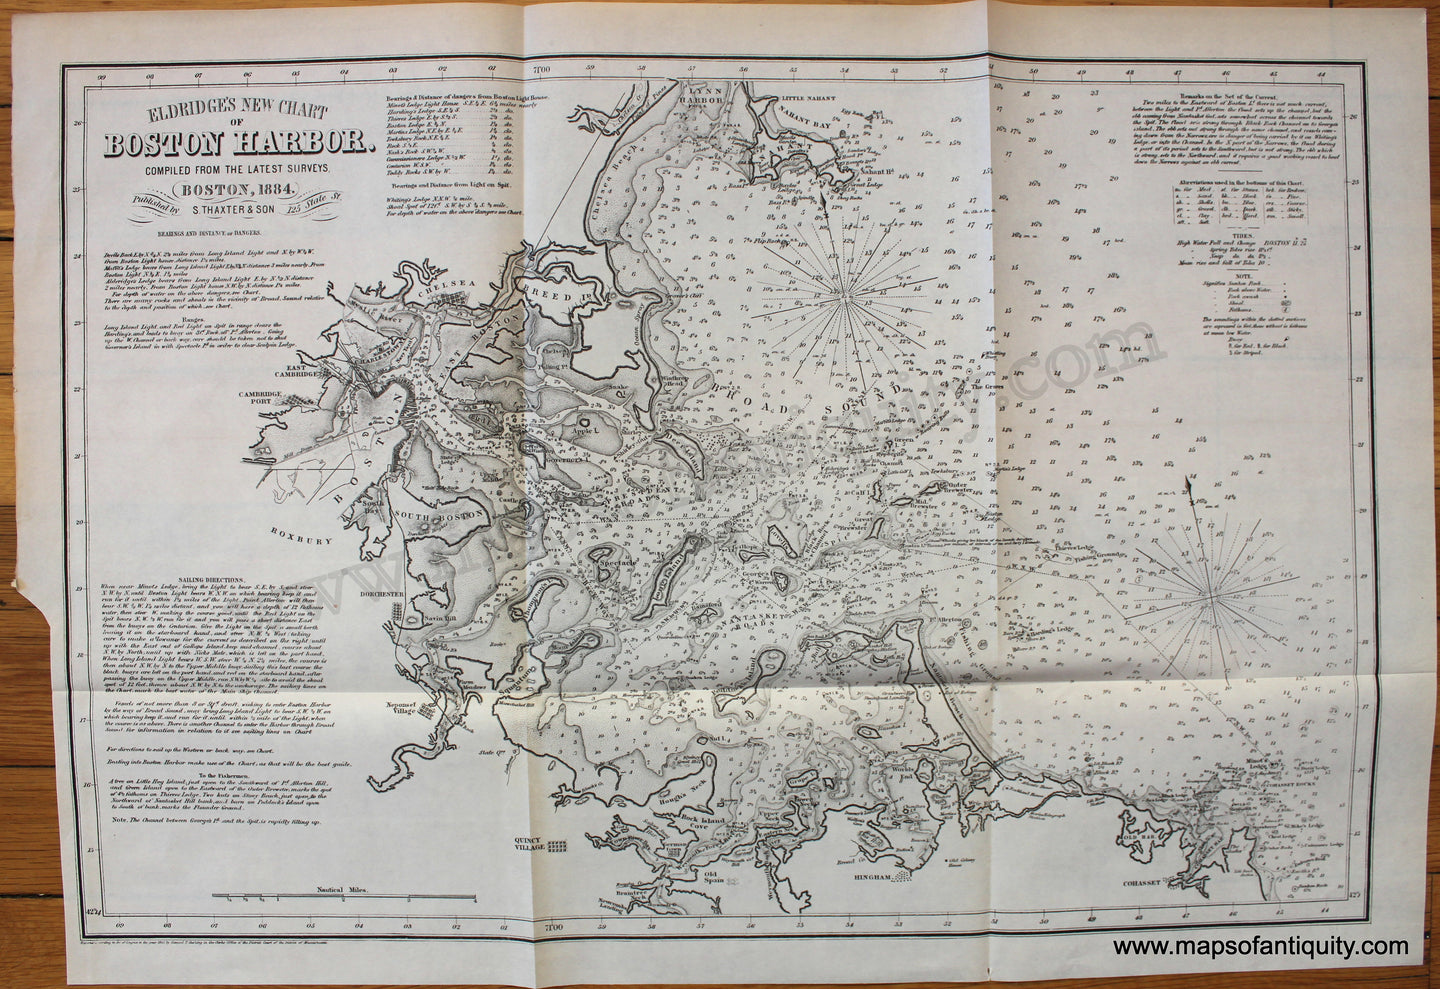 Antique-Nautical-Coast-Pilot-Chart-Map-Boston-Harbor-Eldridge-1884-Thaxter-1880s-1800s-19th-century-Maps-of-Antiquity